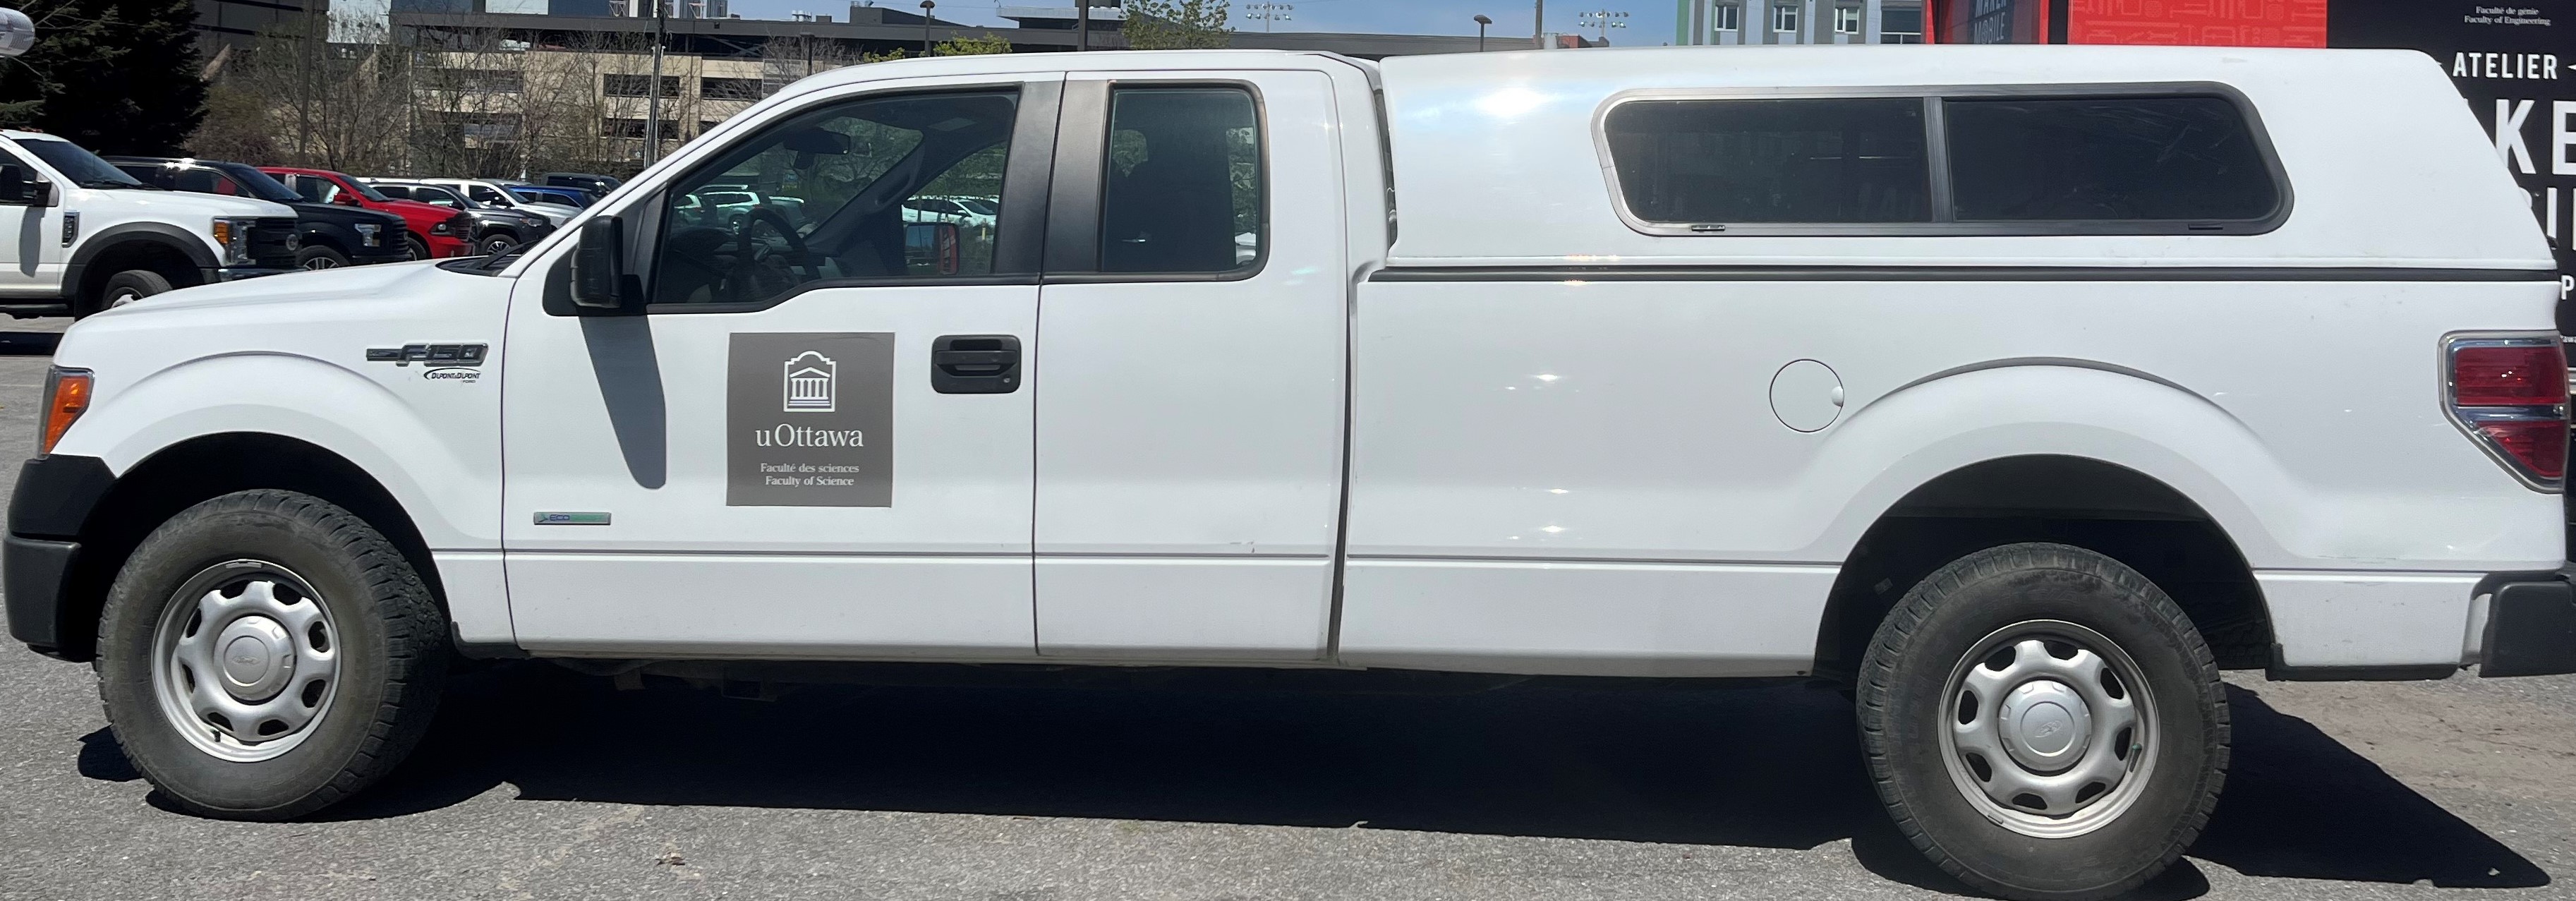 Camion blanc / White truck